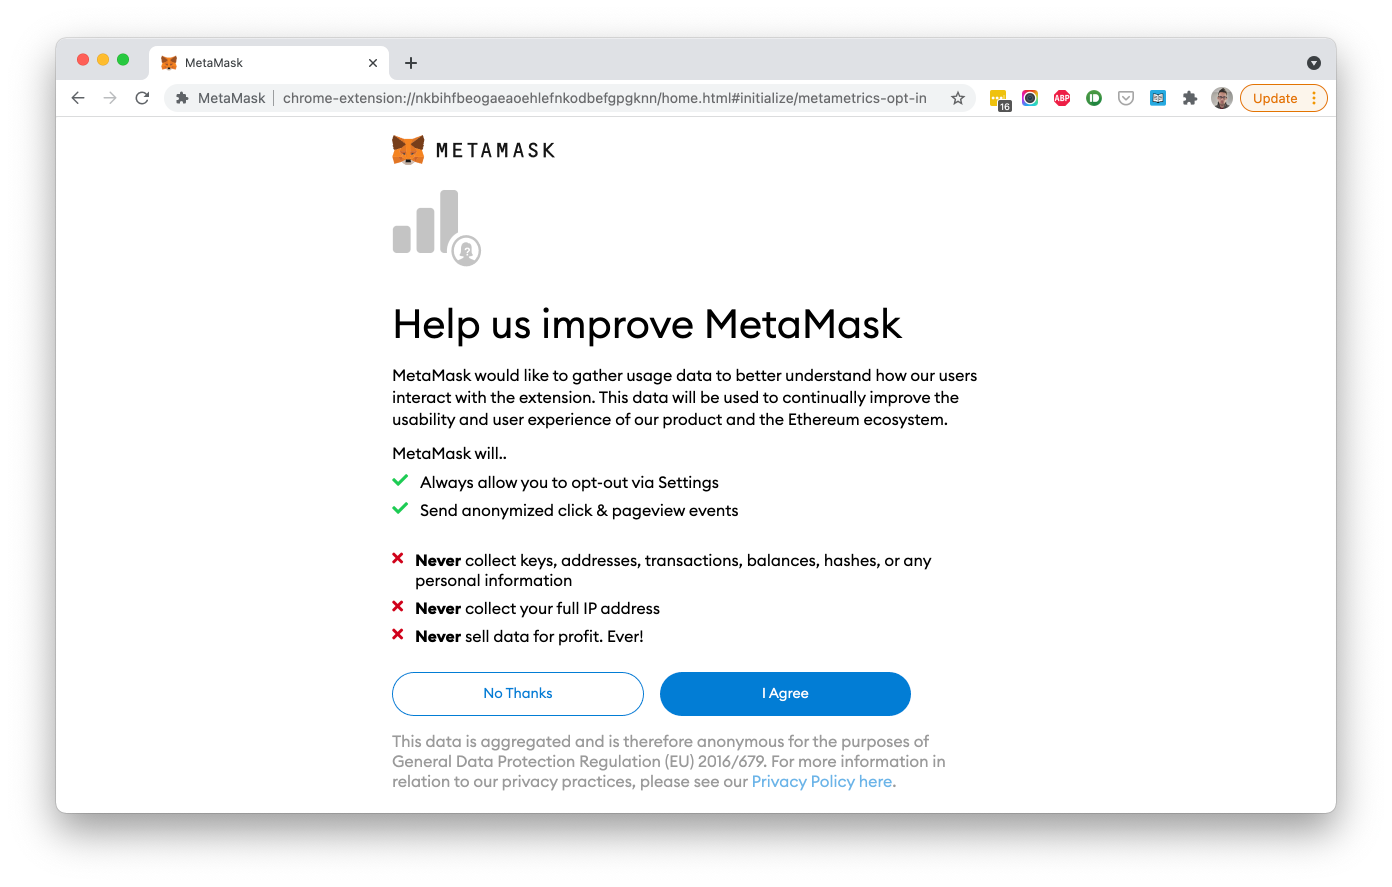 MetaMask - Help us improve